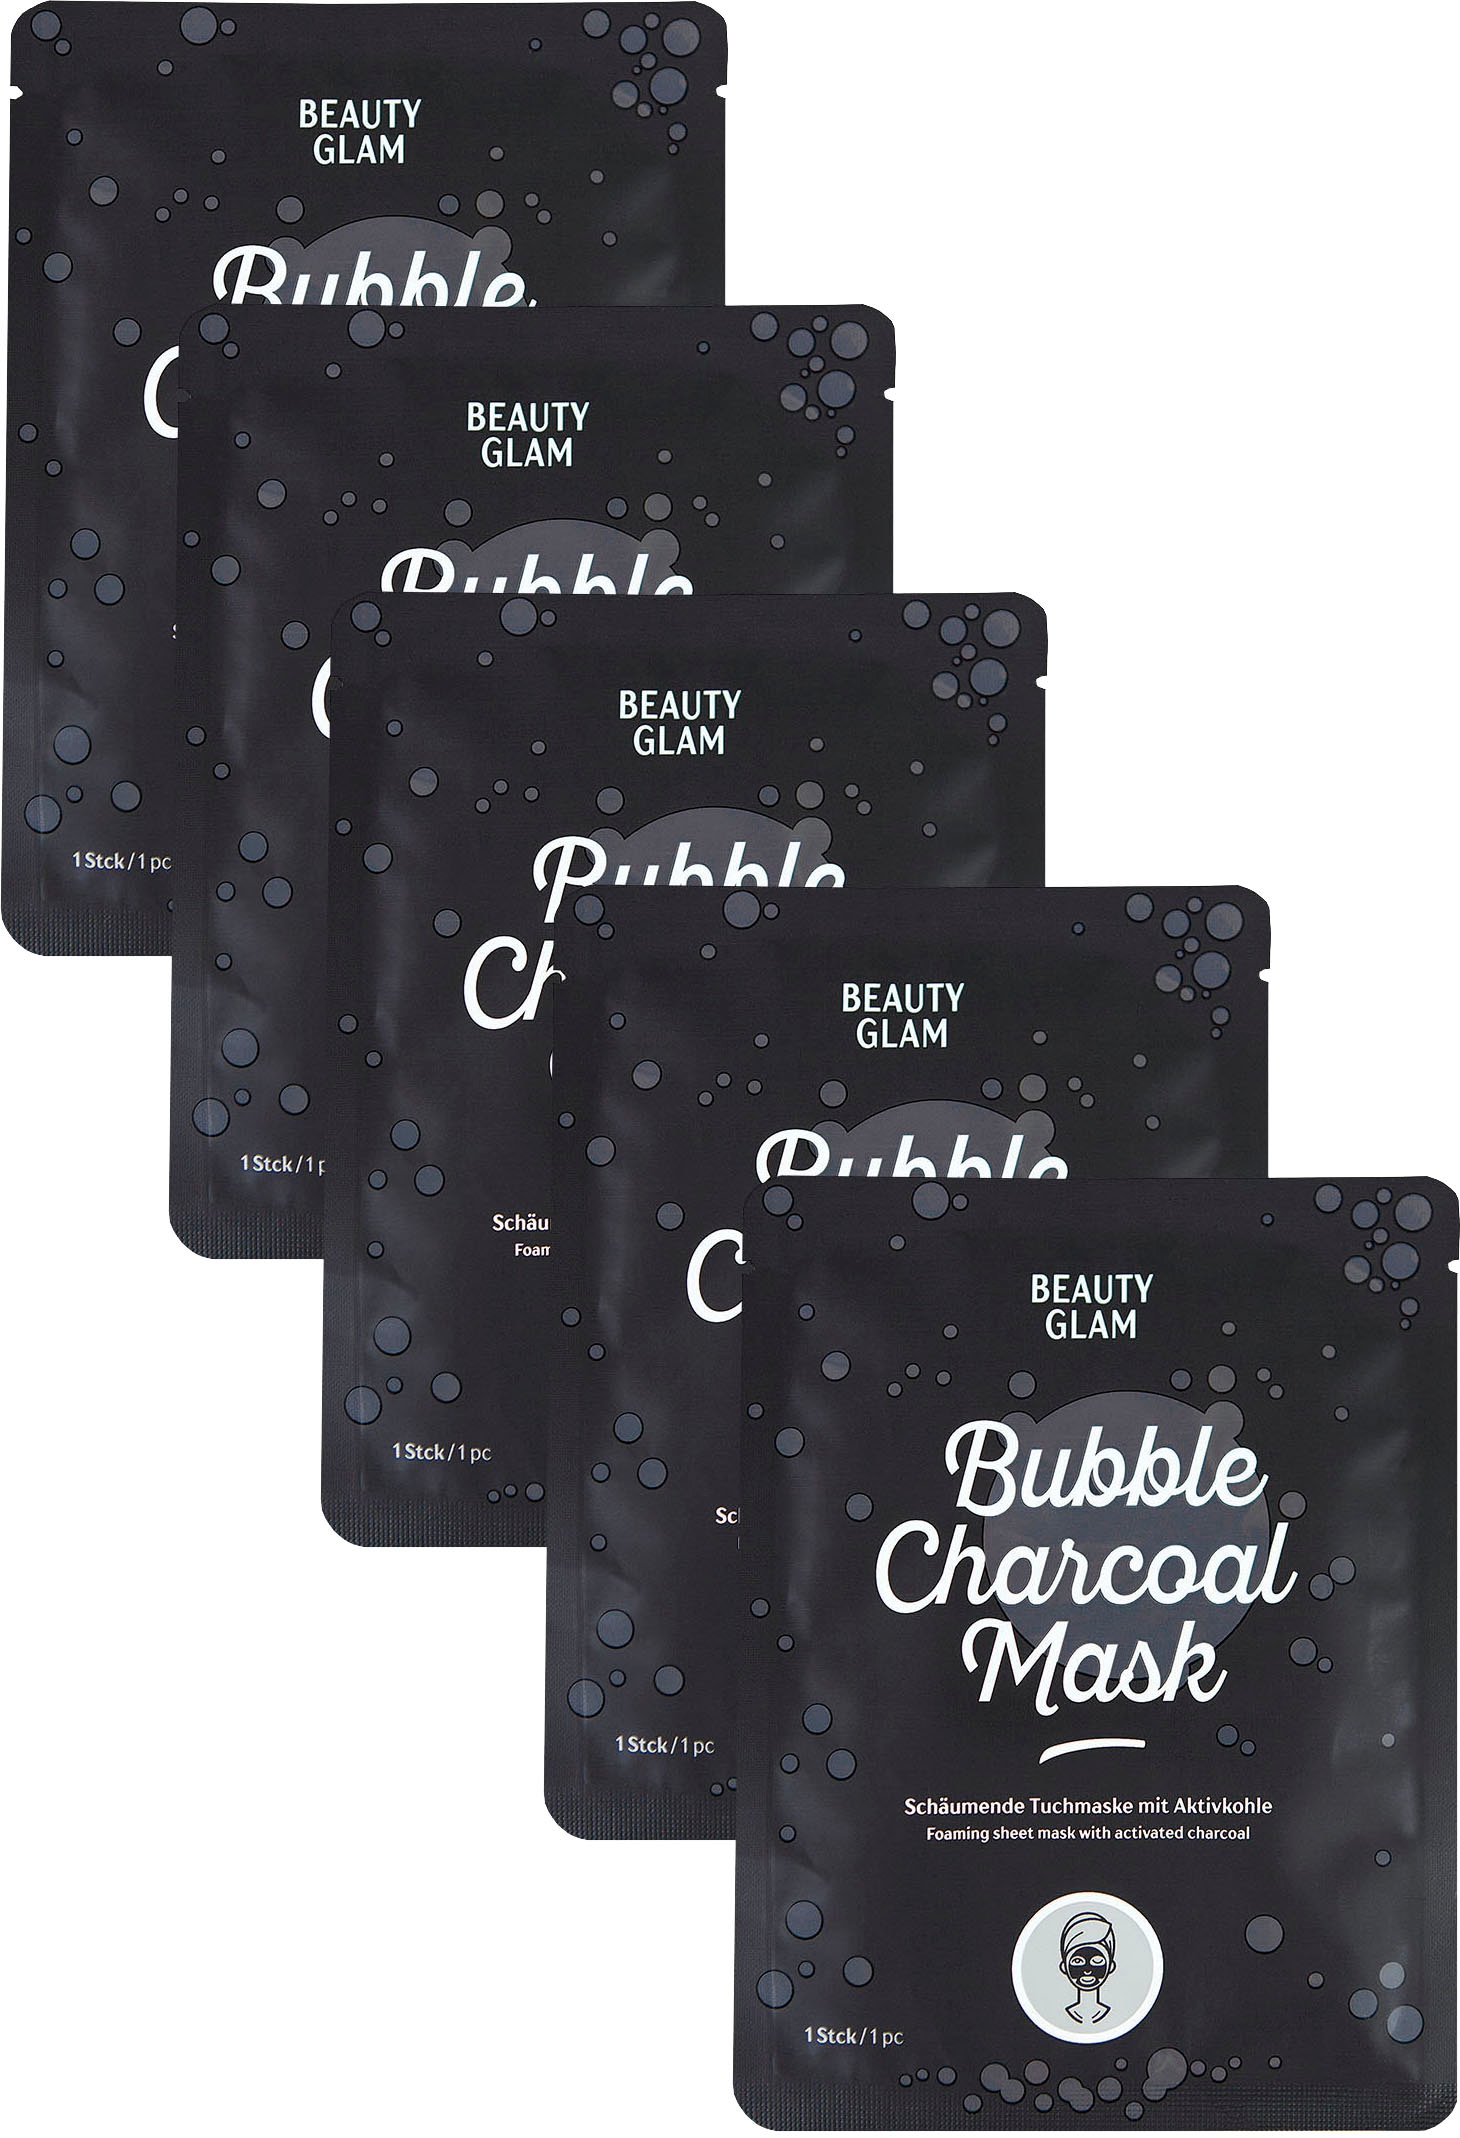 BEAUTY GLAM Gesichtsmasken-Set »Bubble Charchoal Mask«, (Set, 5 tlg.)  kaufen